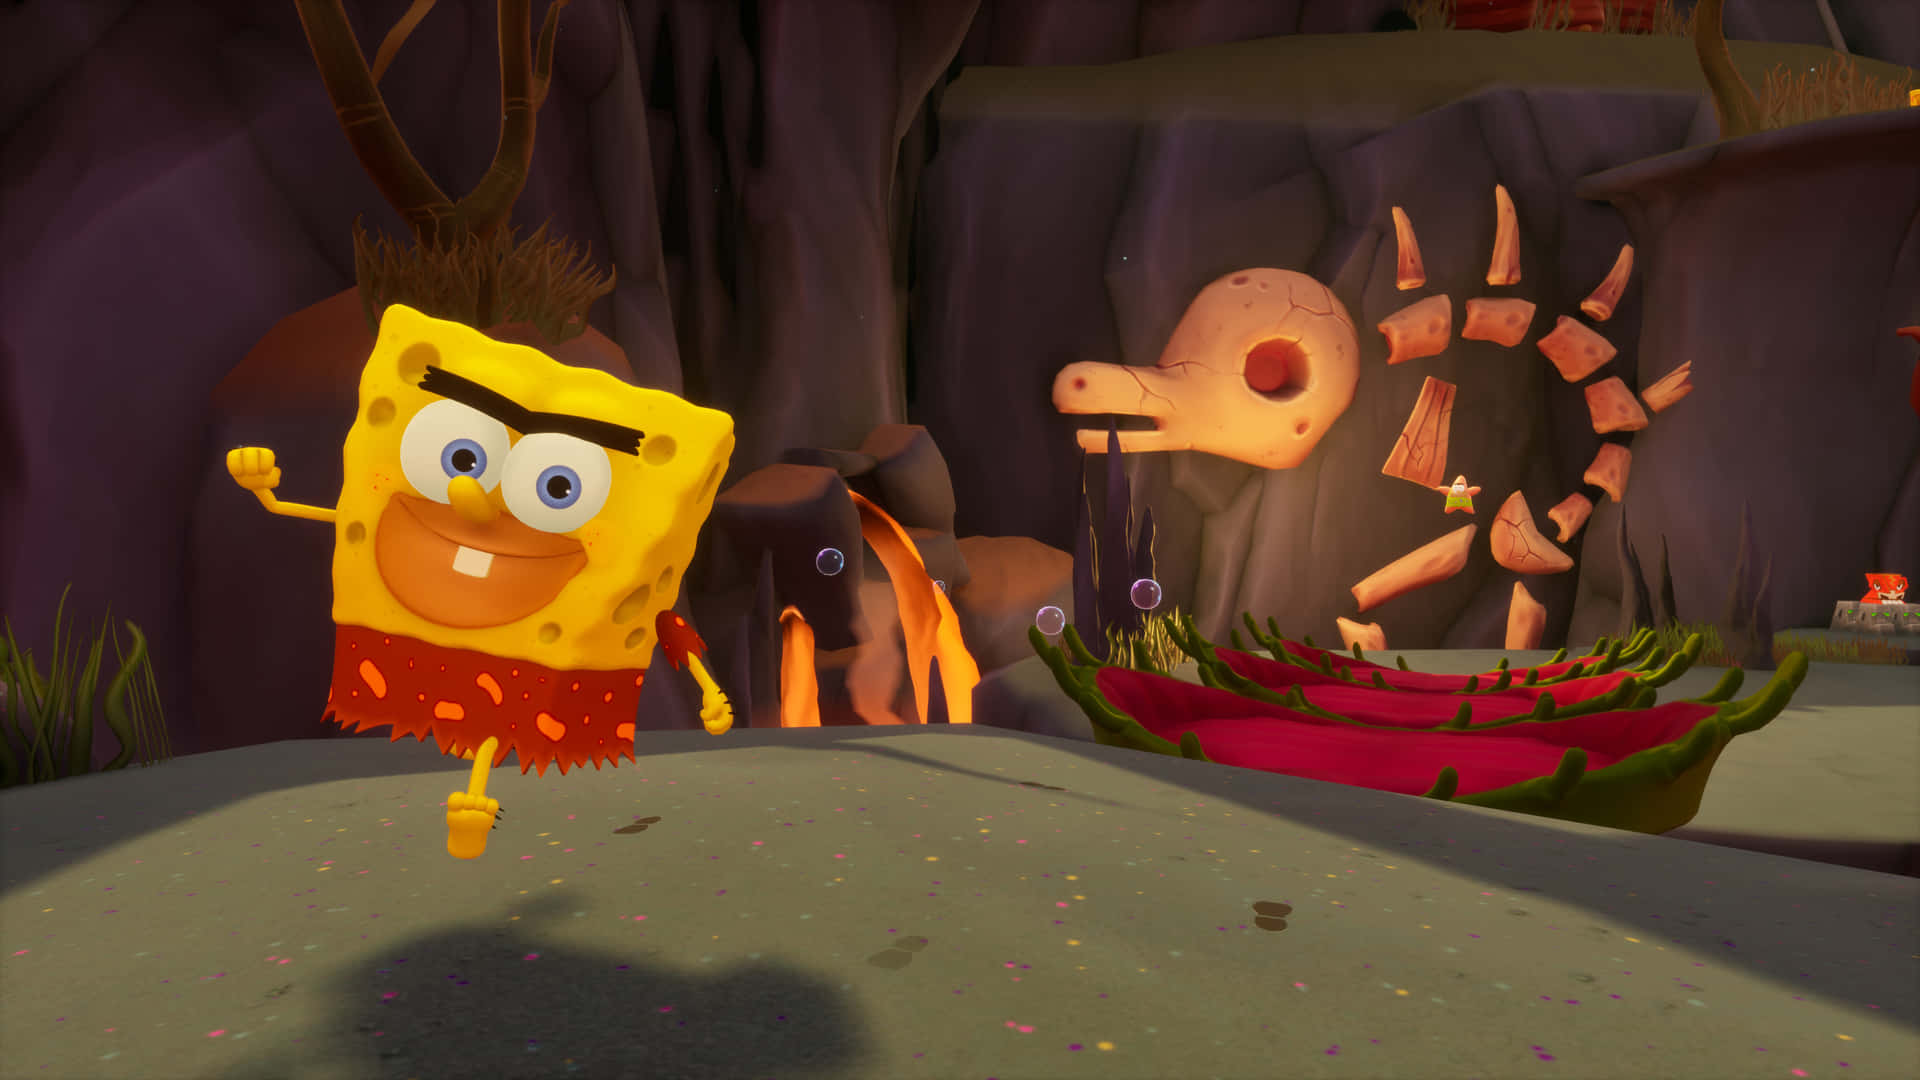 Caveman Spongebob billede rammer en farverig verden